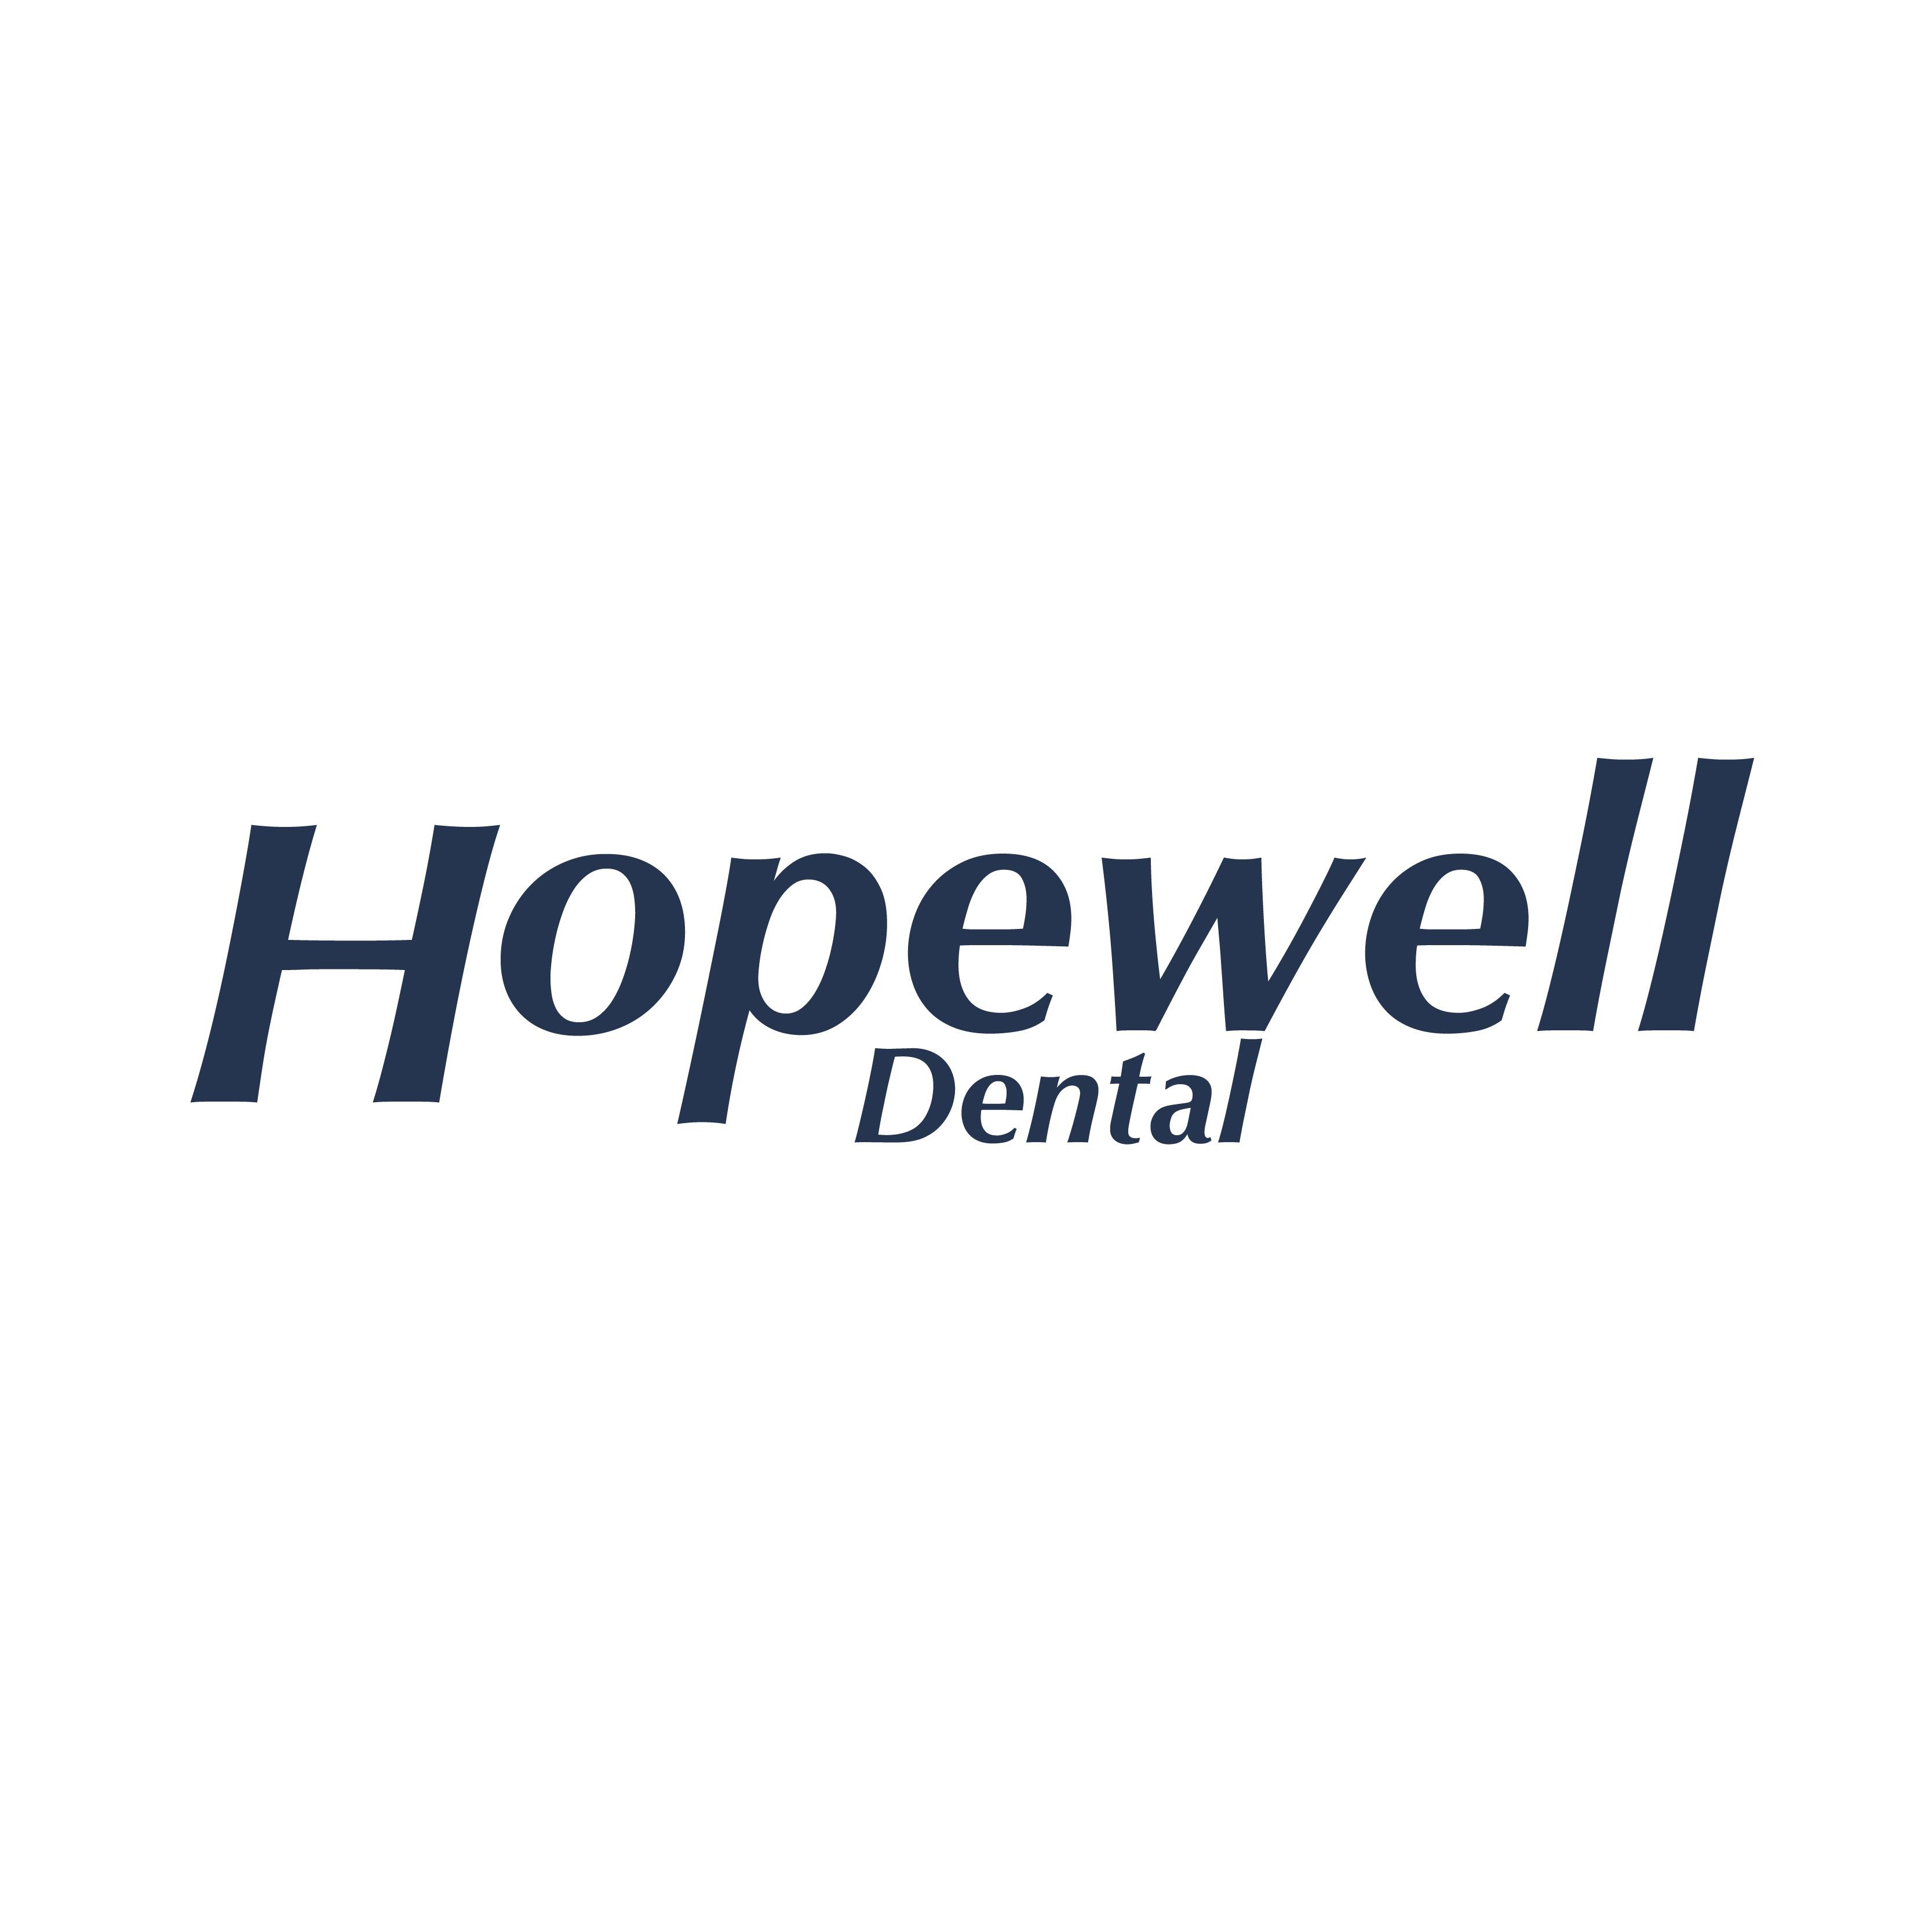 Hopewell Dental - Heath, OH 43056 - (740)522-5000 | ShowMeLocal.com